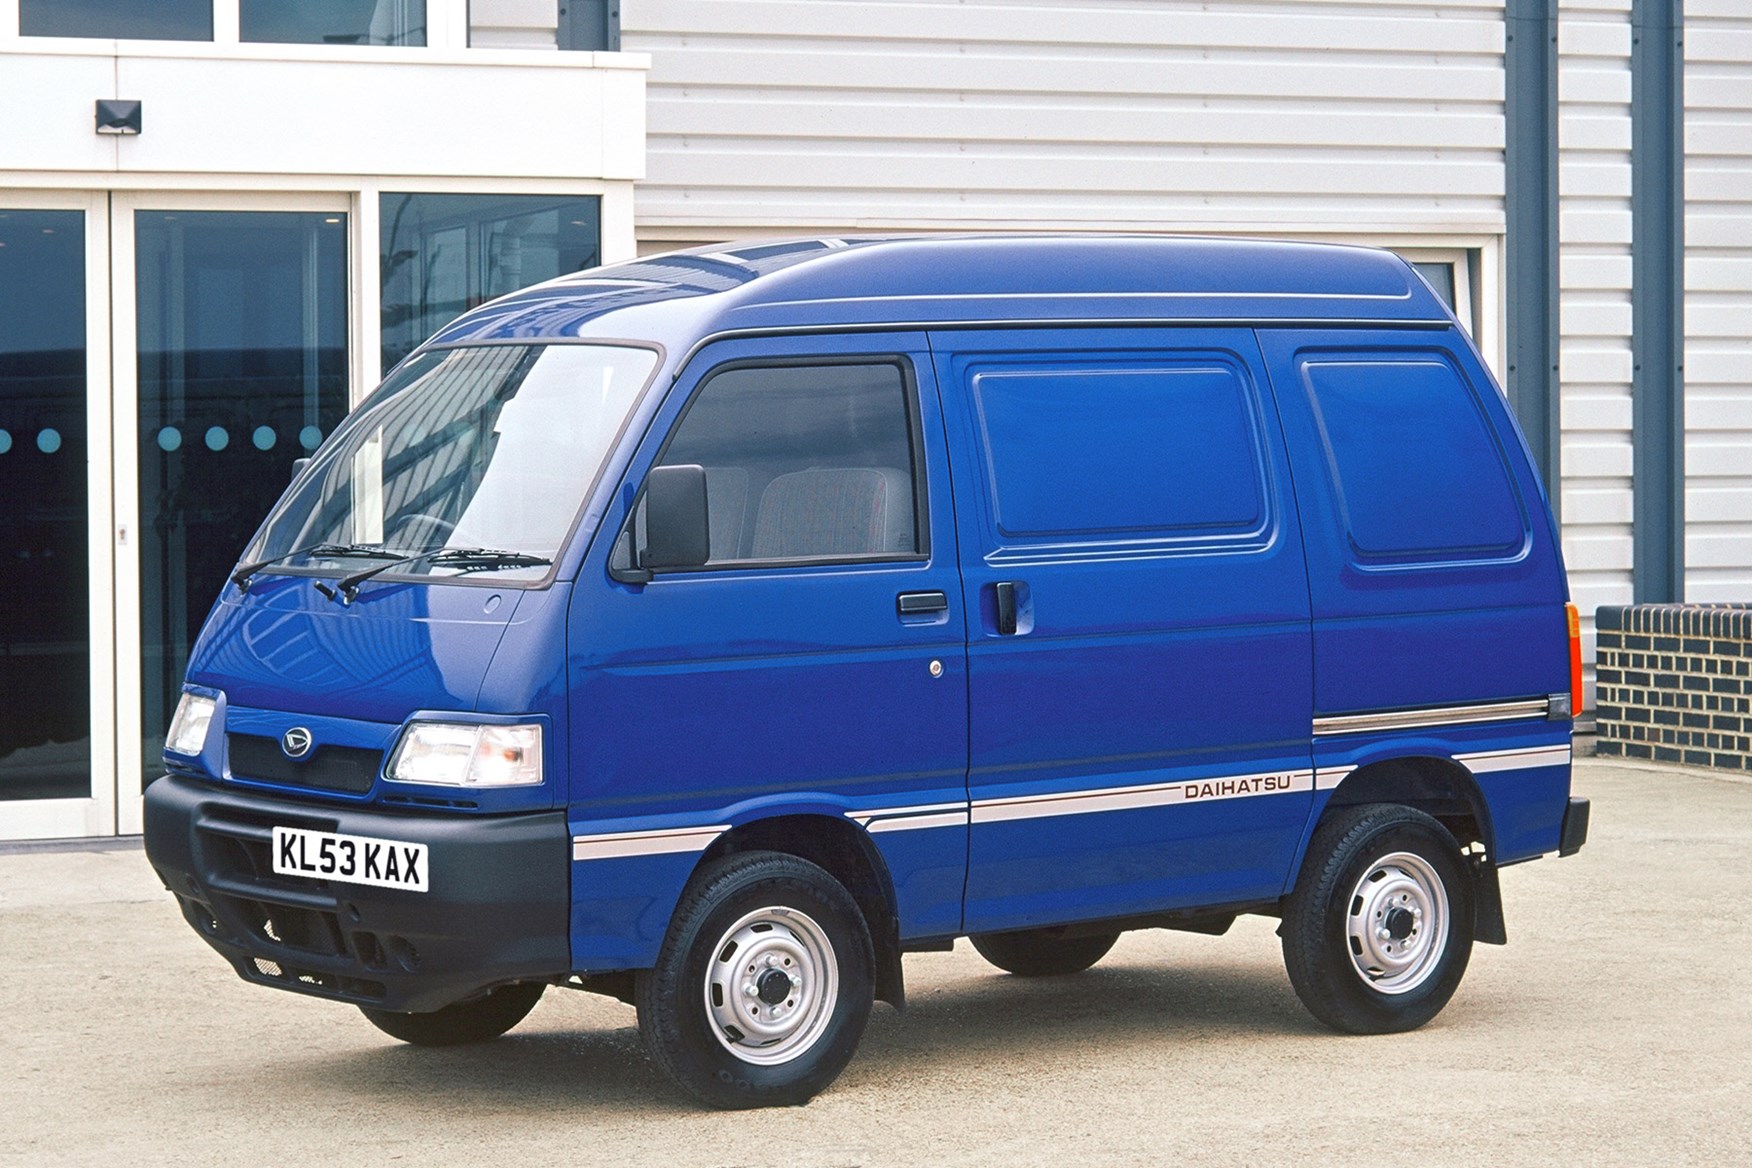 Daihatsu Hijet review on Parkers Vans - exterior